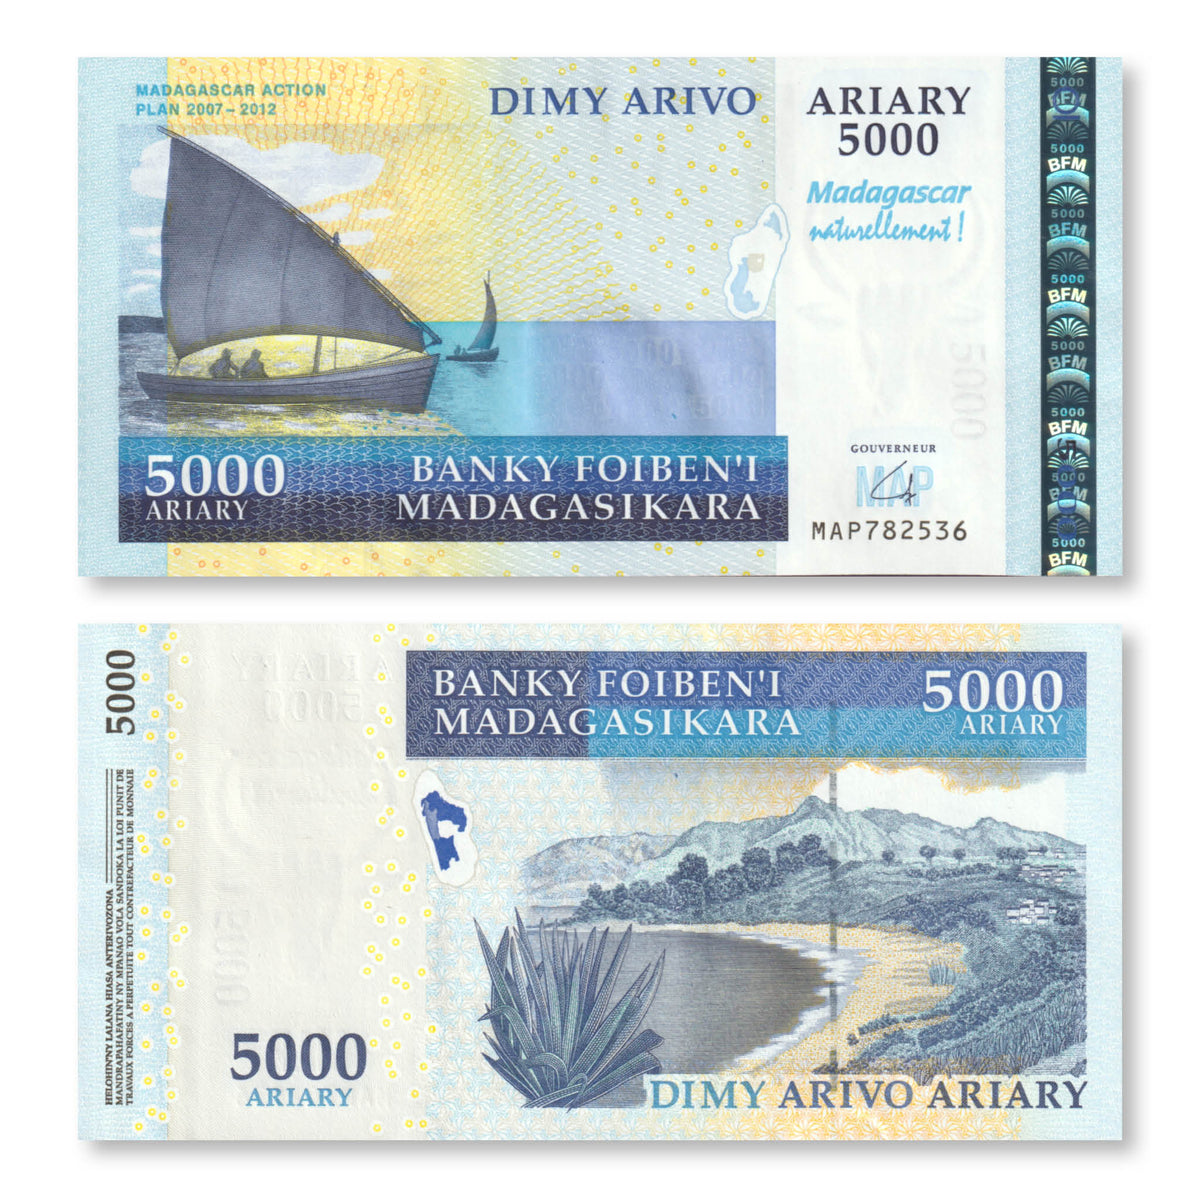 Madagascar 5000 Ariary, 2007, B331a, P94a, UNC - Robert's World Money - World Banknotes